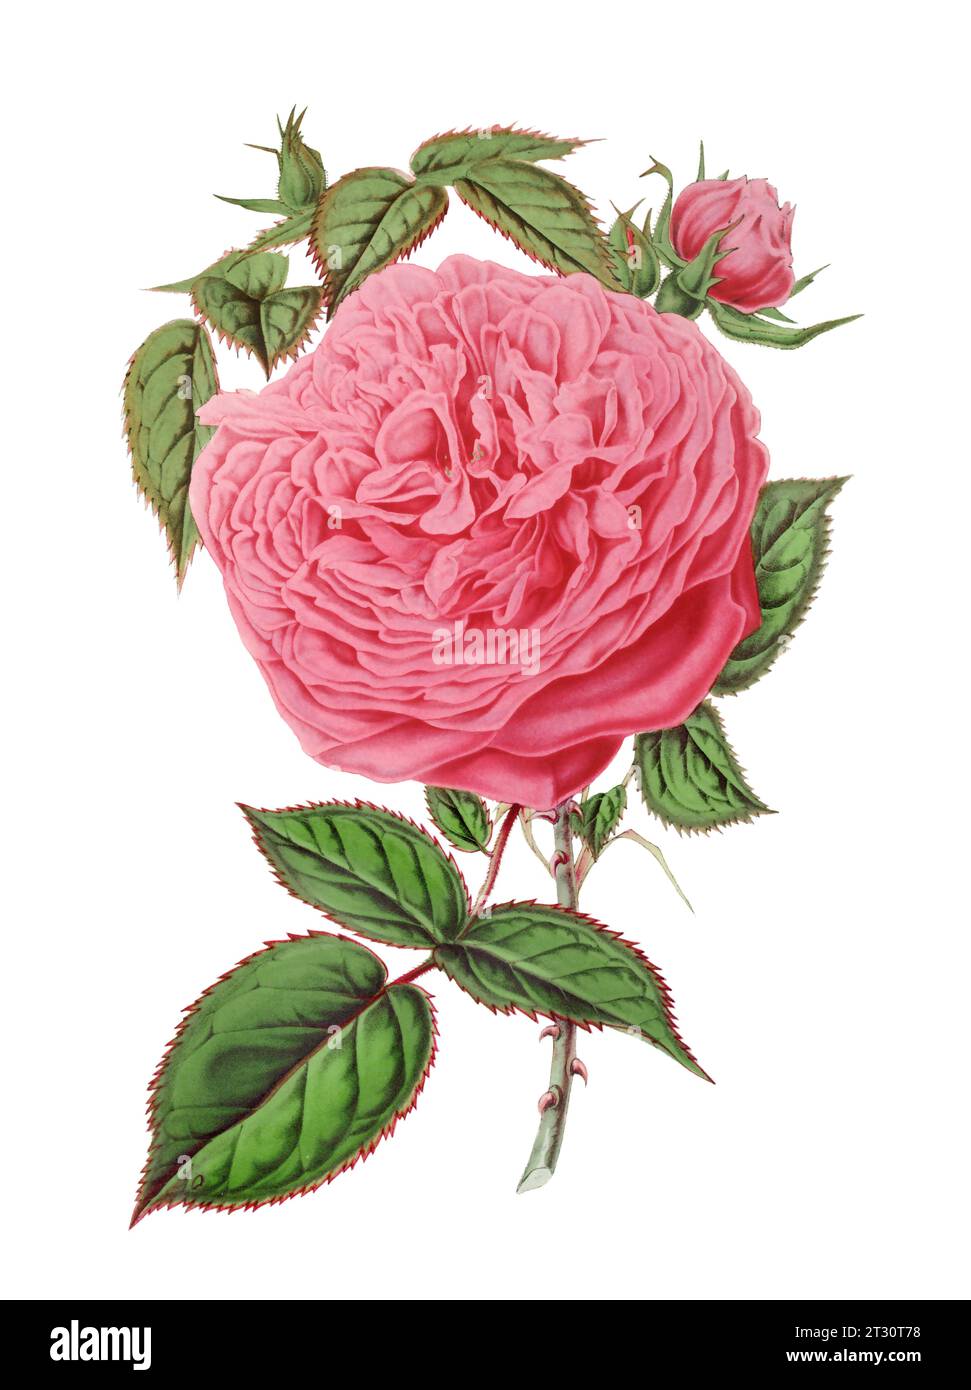 Colorful Rose Flower Illustration: A digital vintage-style flower on a plain white background. Stock Photo